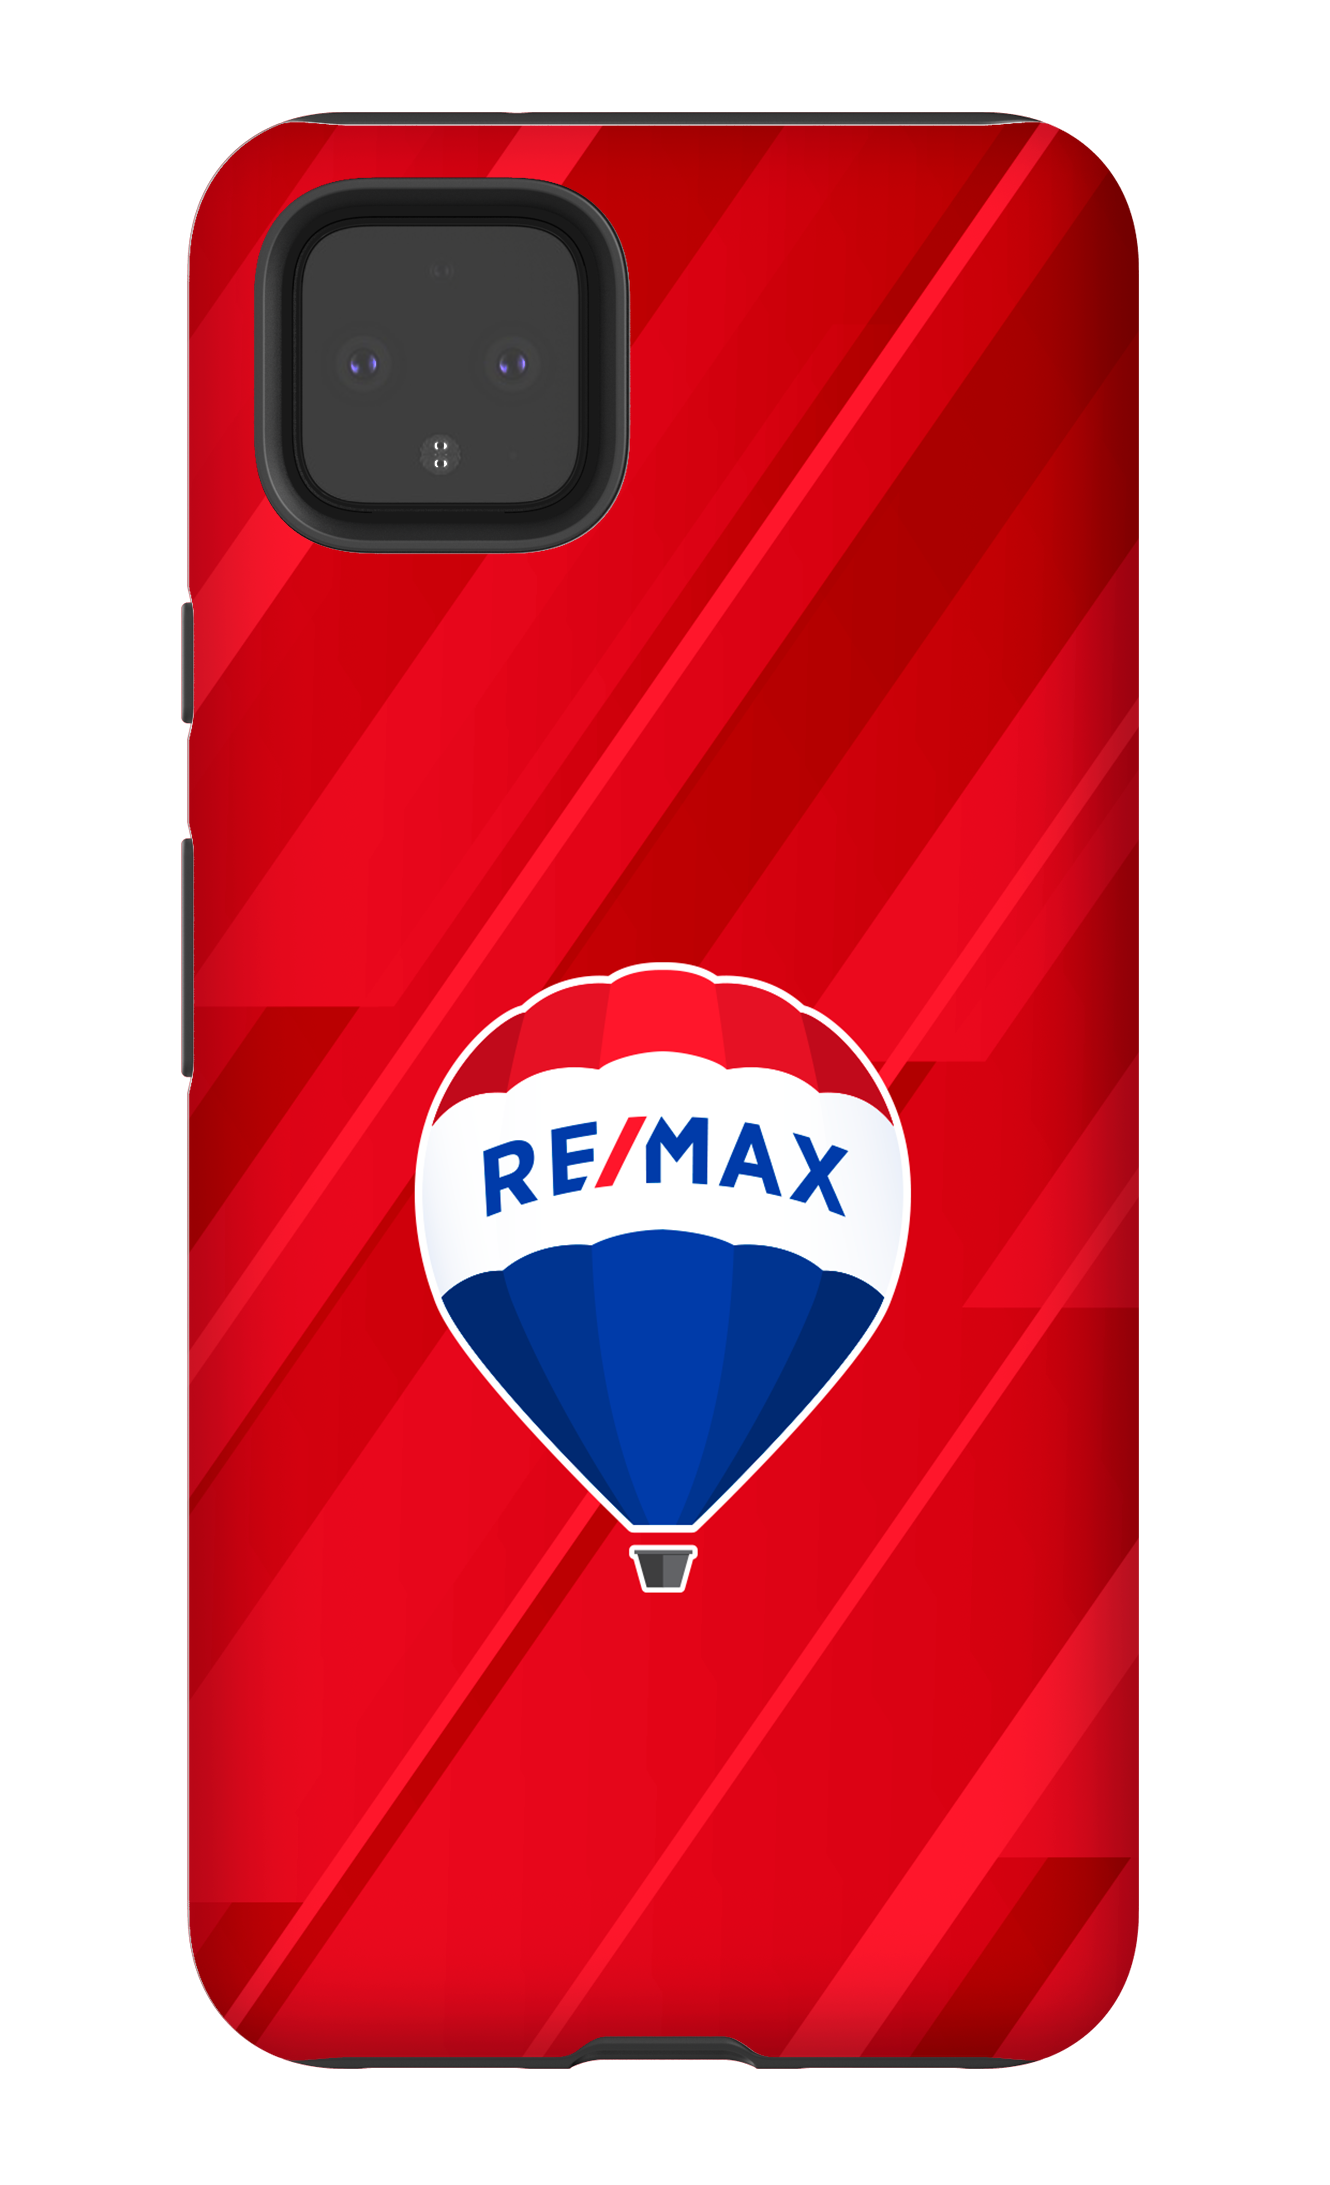 Remax Rouge - Google Pixel 4 XL